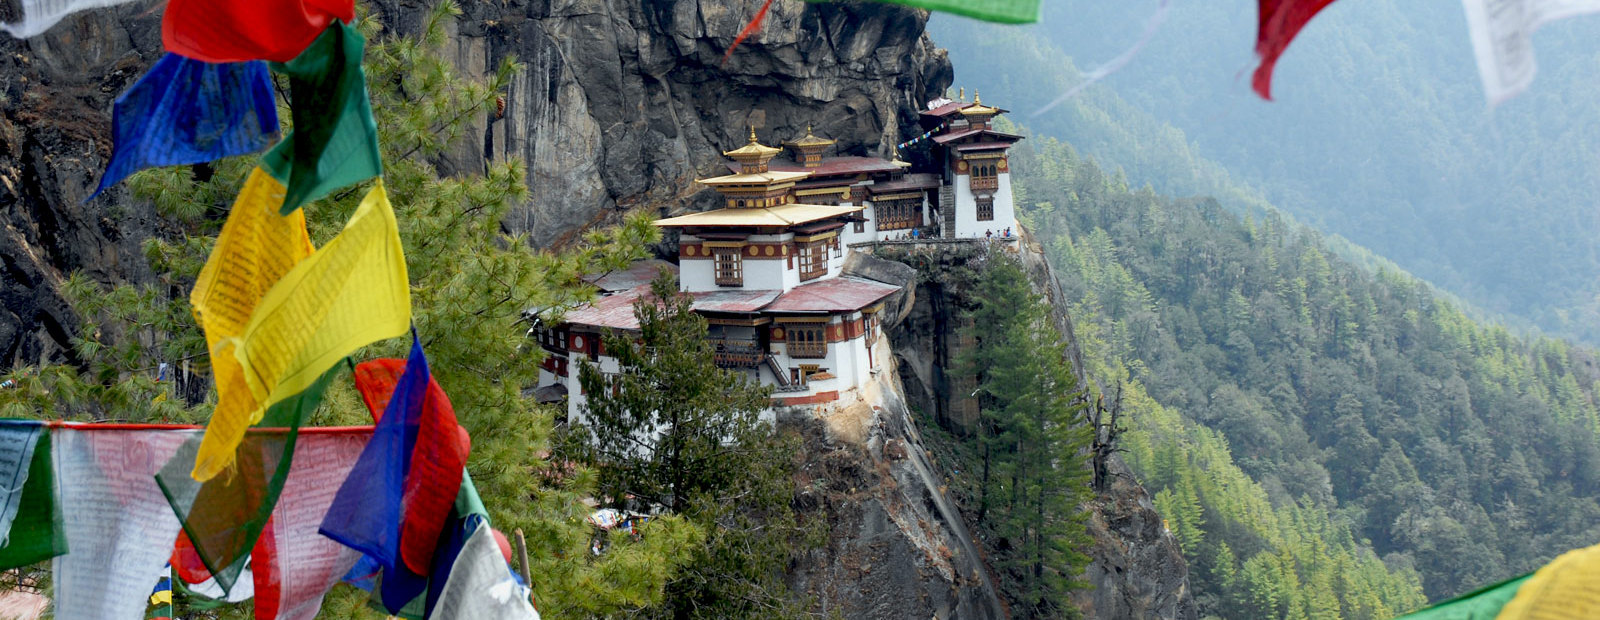 Tigerns näste kloster i Bhutan